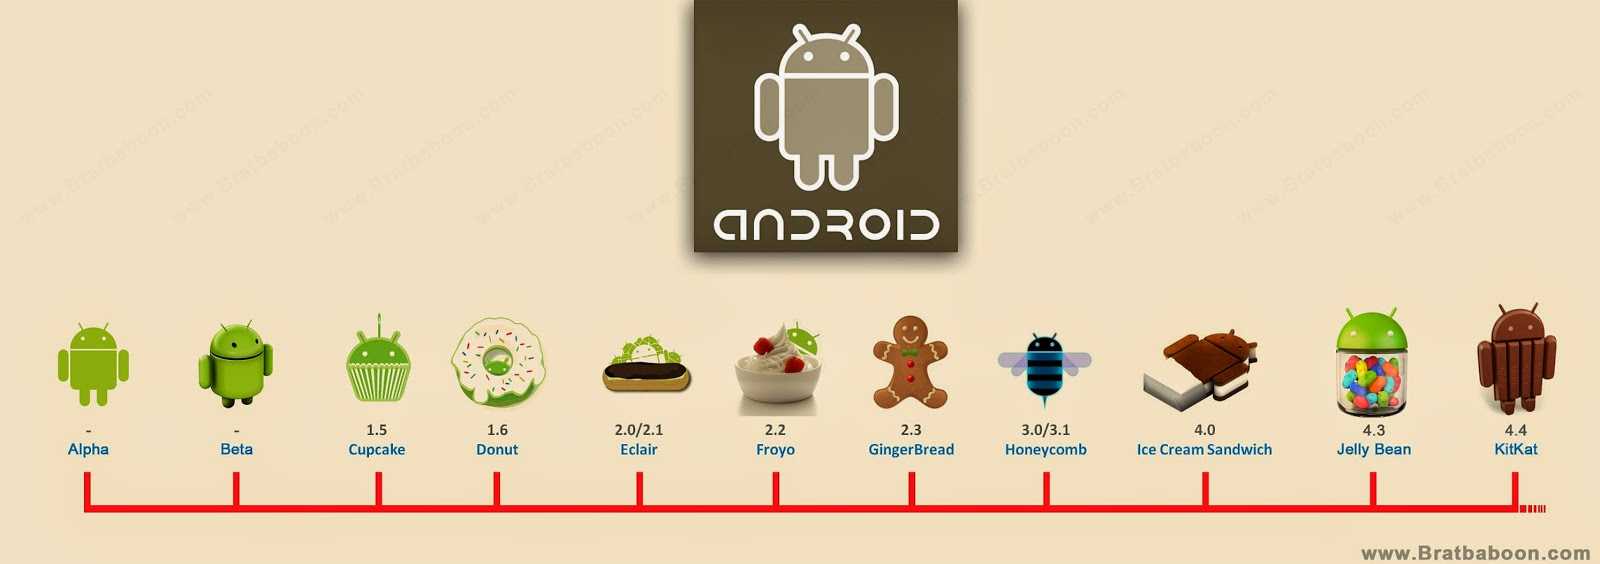 Как понизить версию android 12 beta 3.1 до android 11 на телефонах pixel